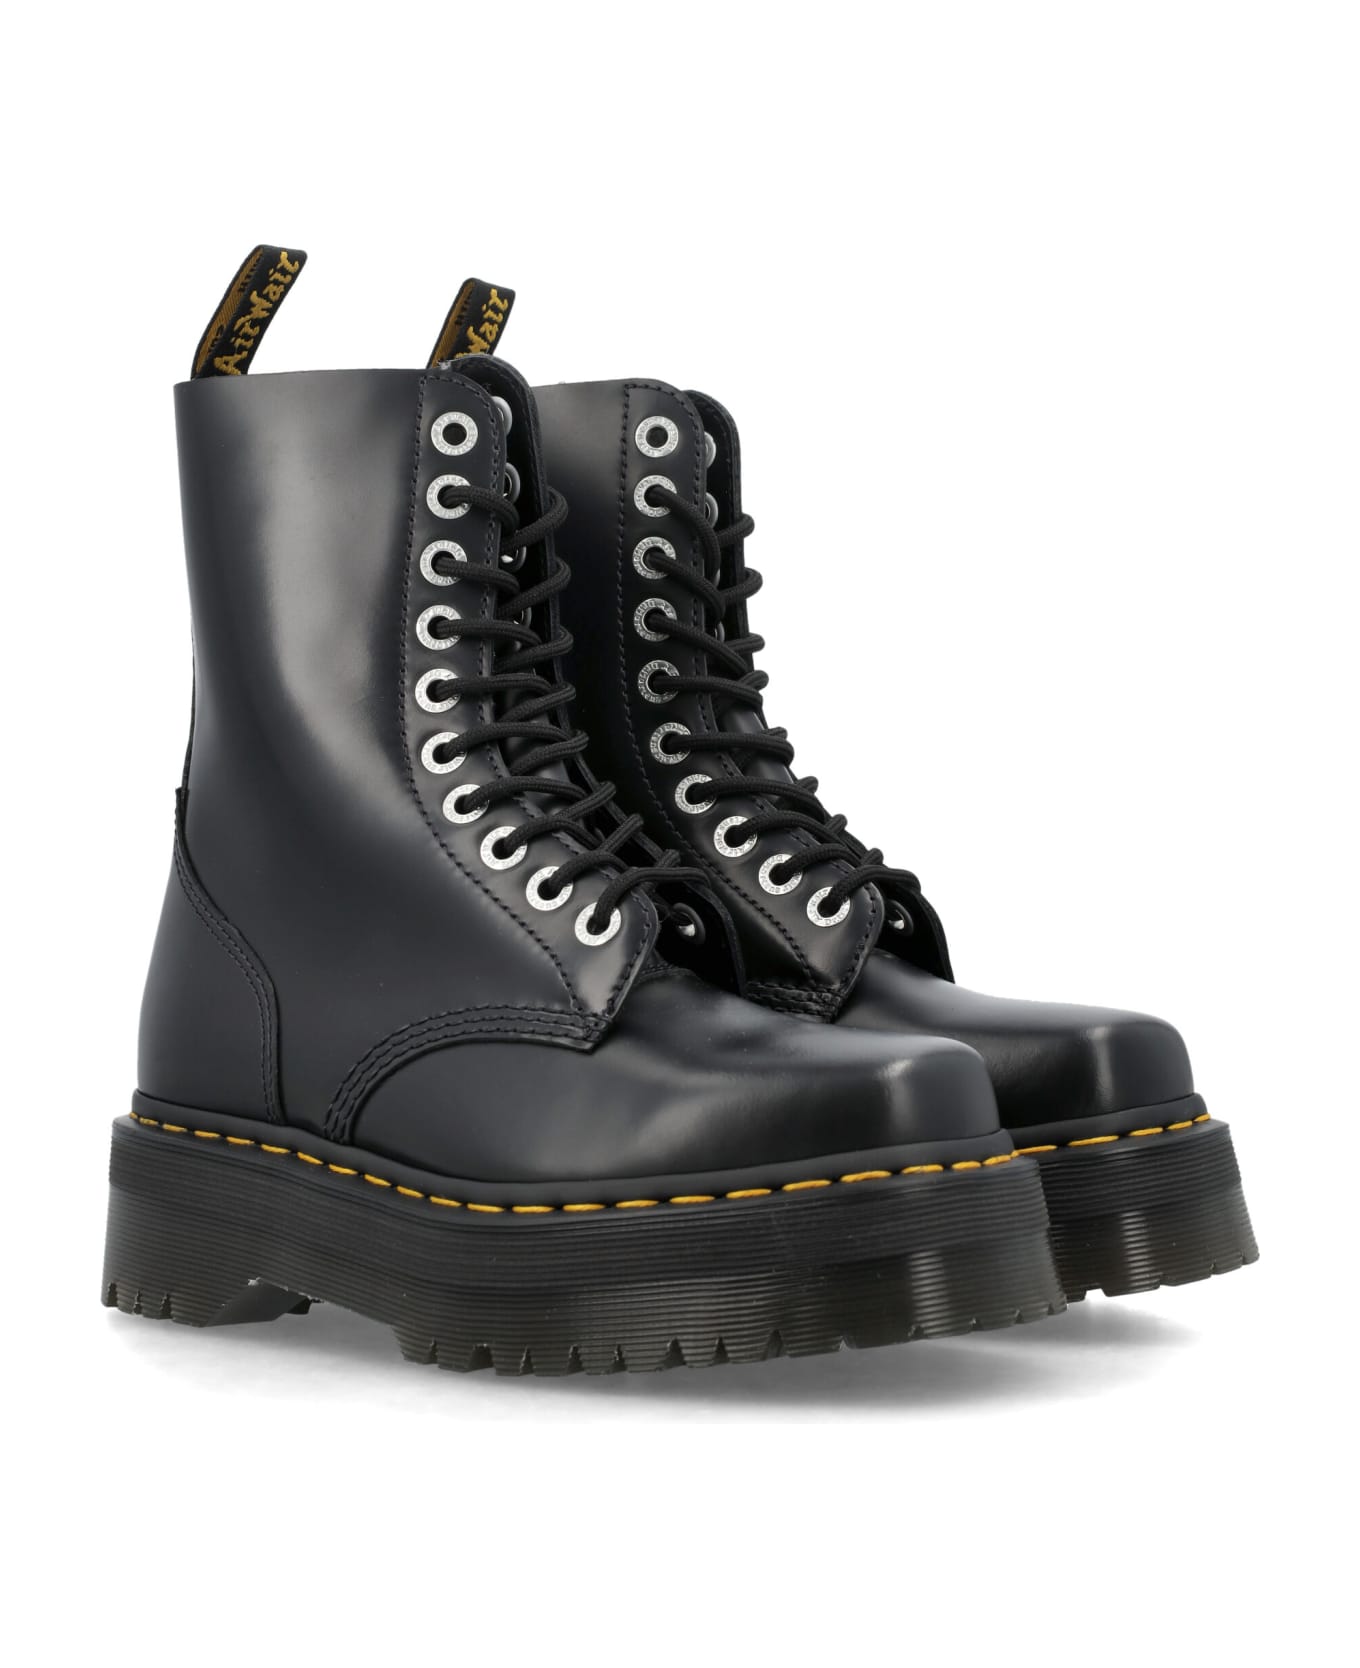 Dr. Martens 1490 Quad Squared Leather Boots - BLACK ブーツ